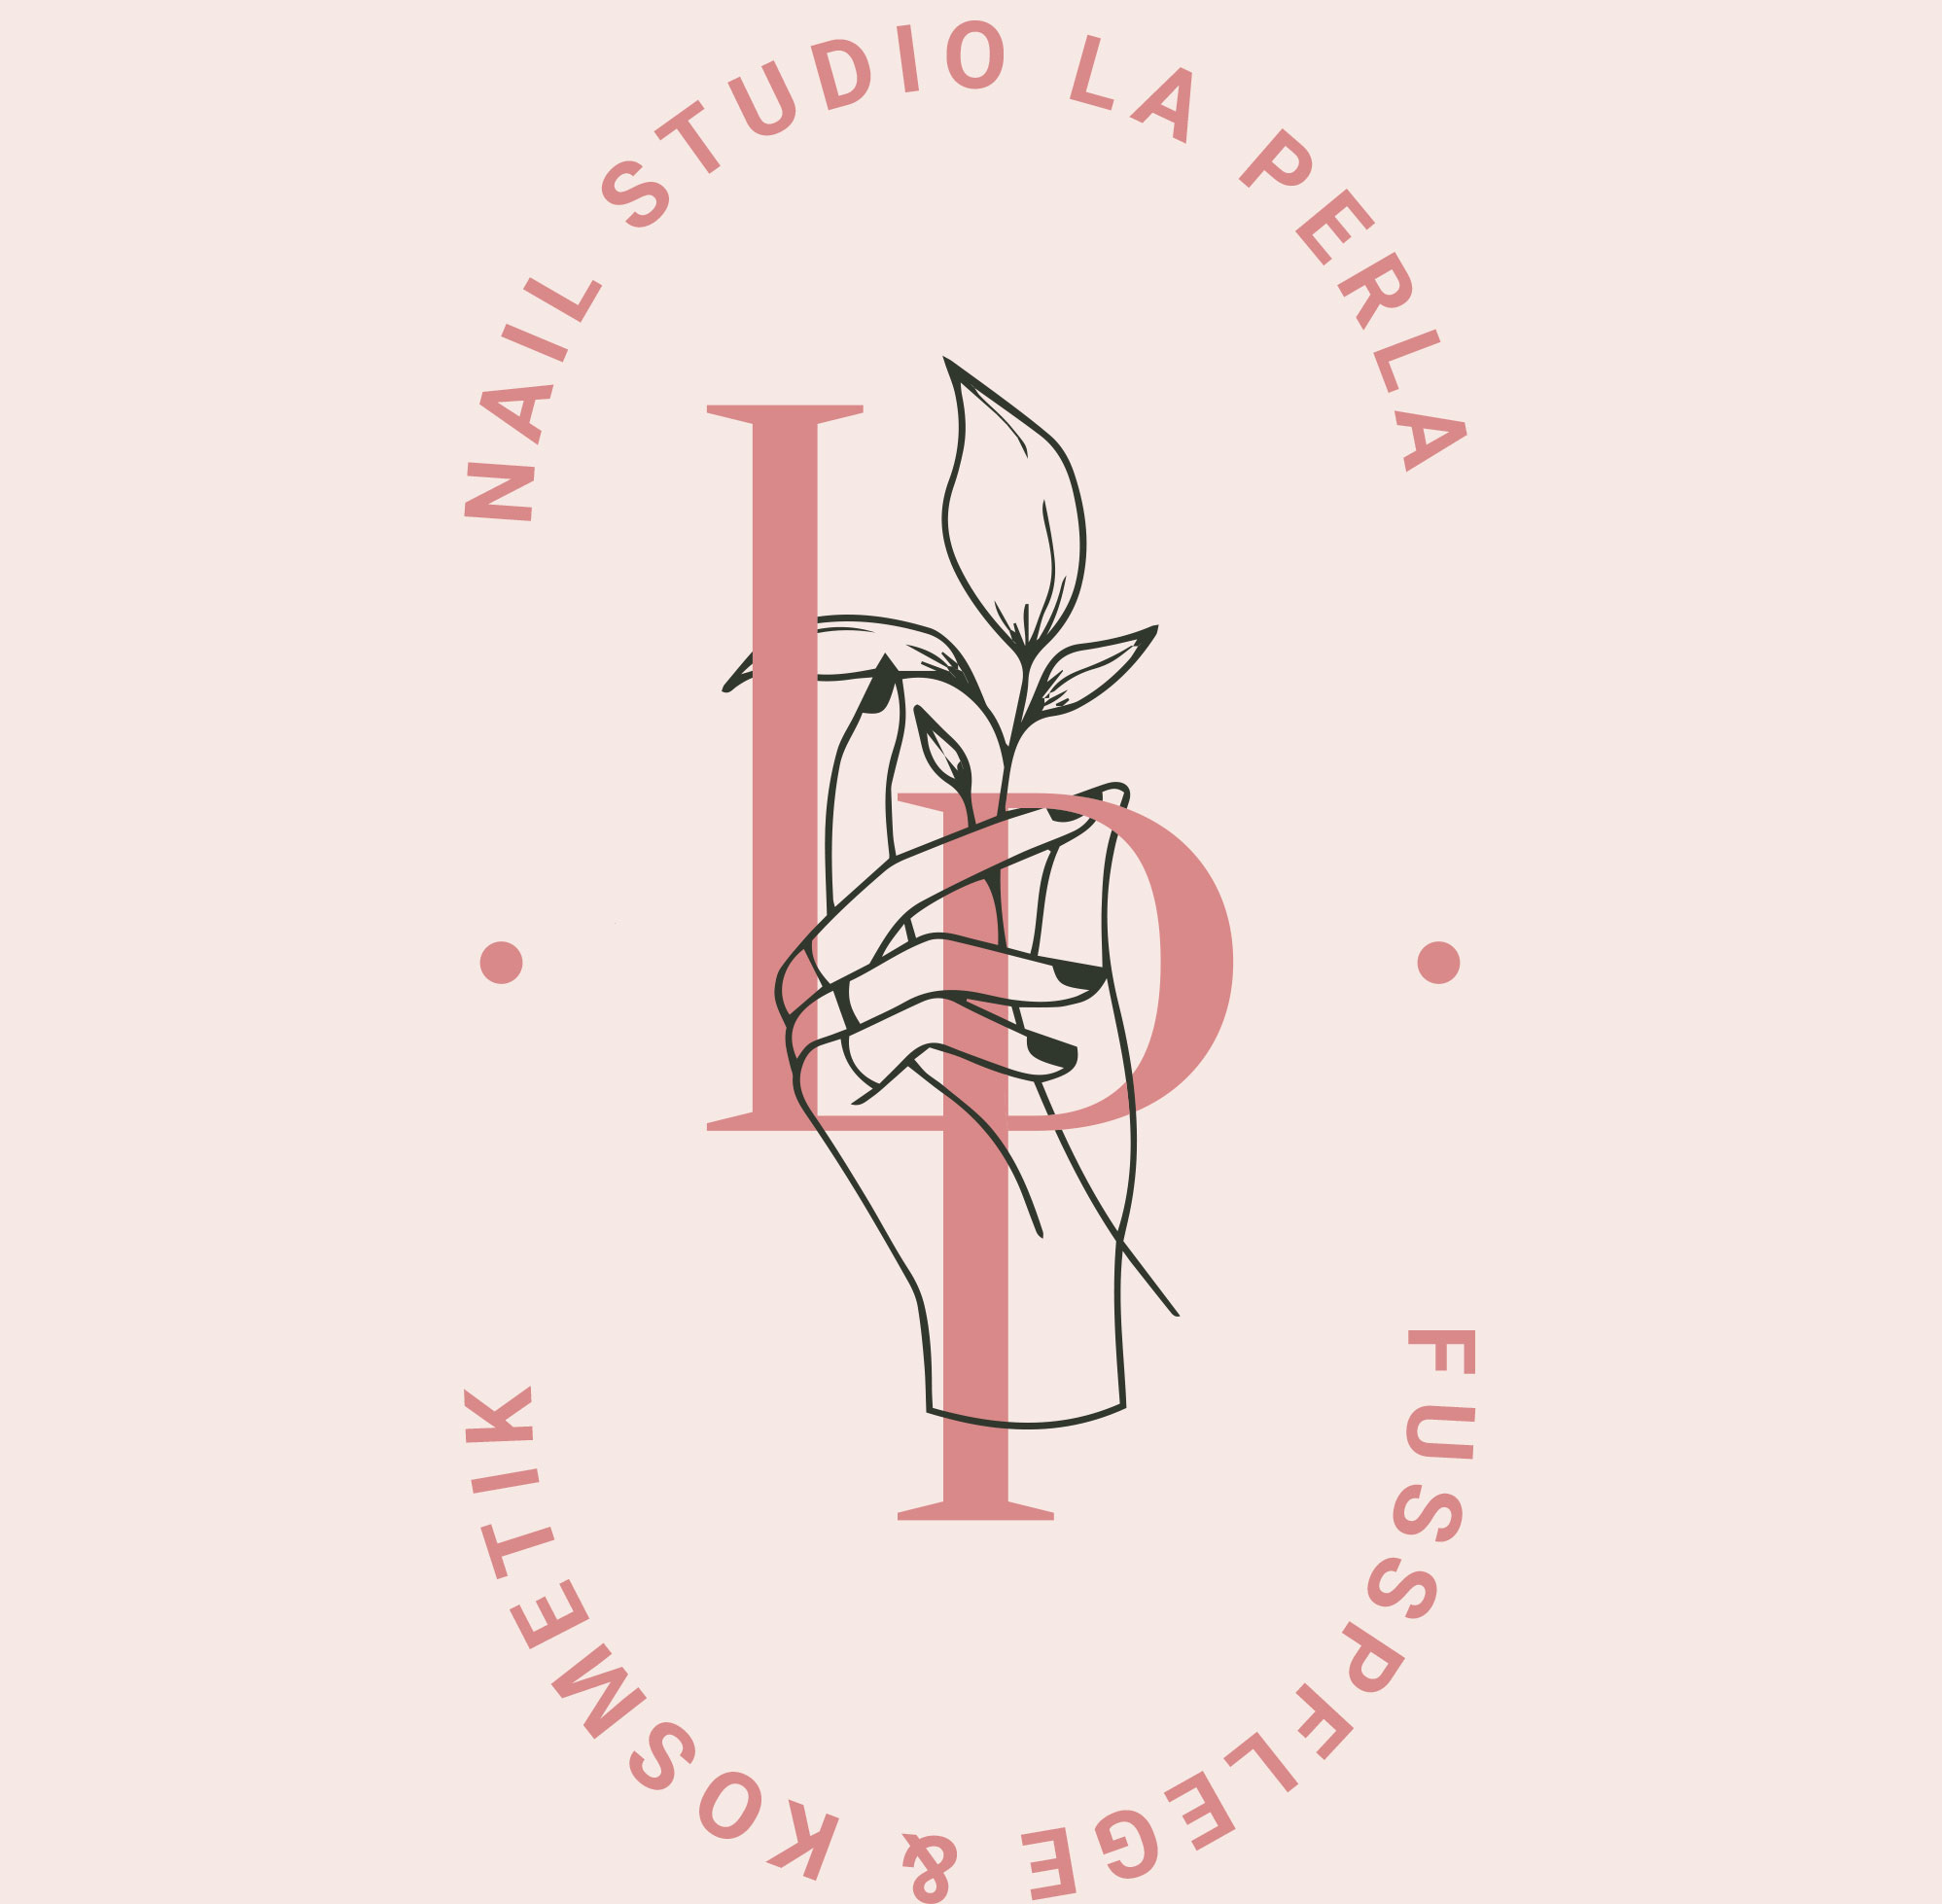 laperla_logo